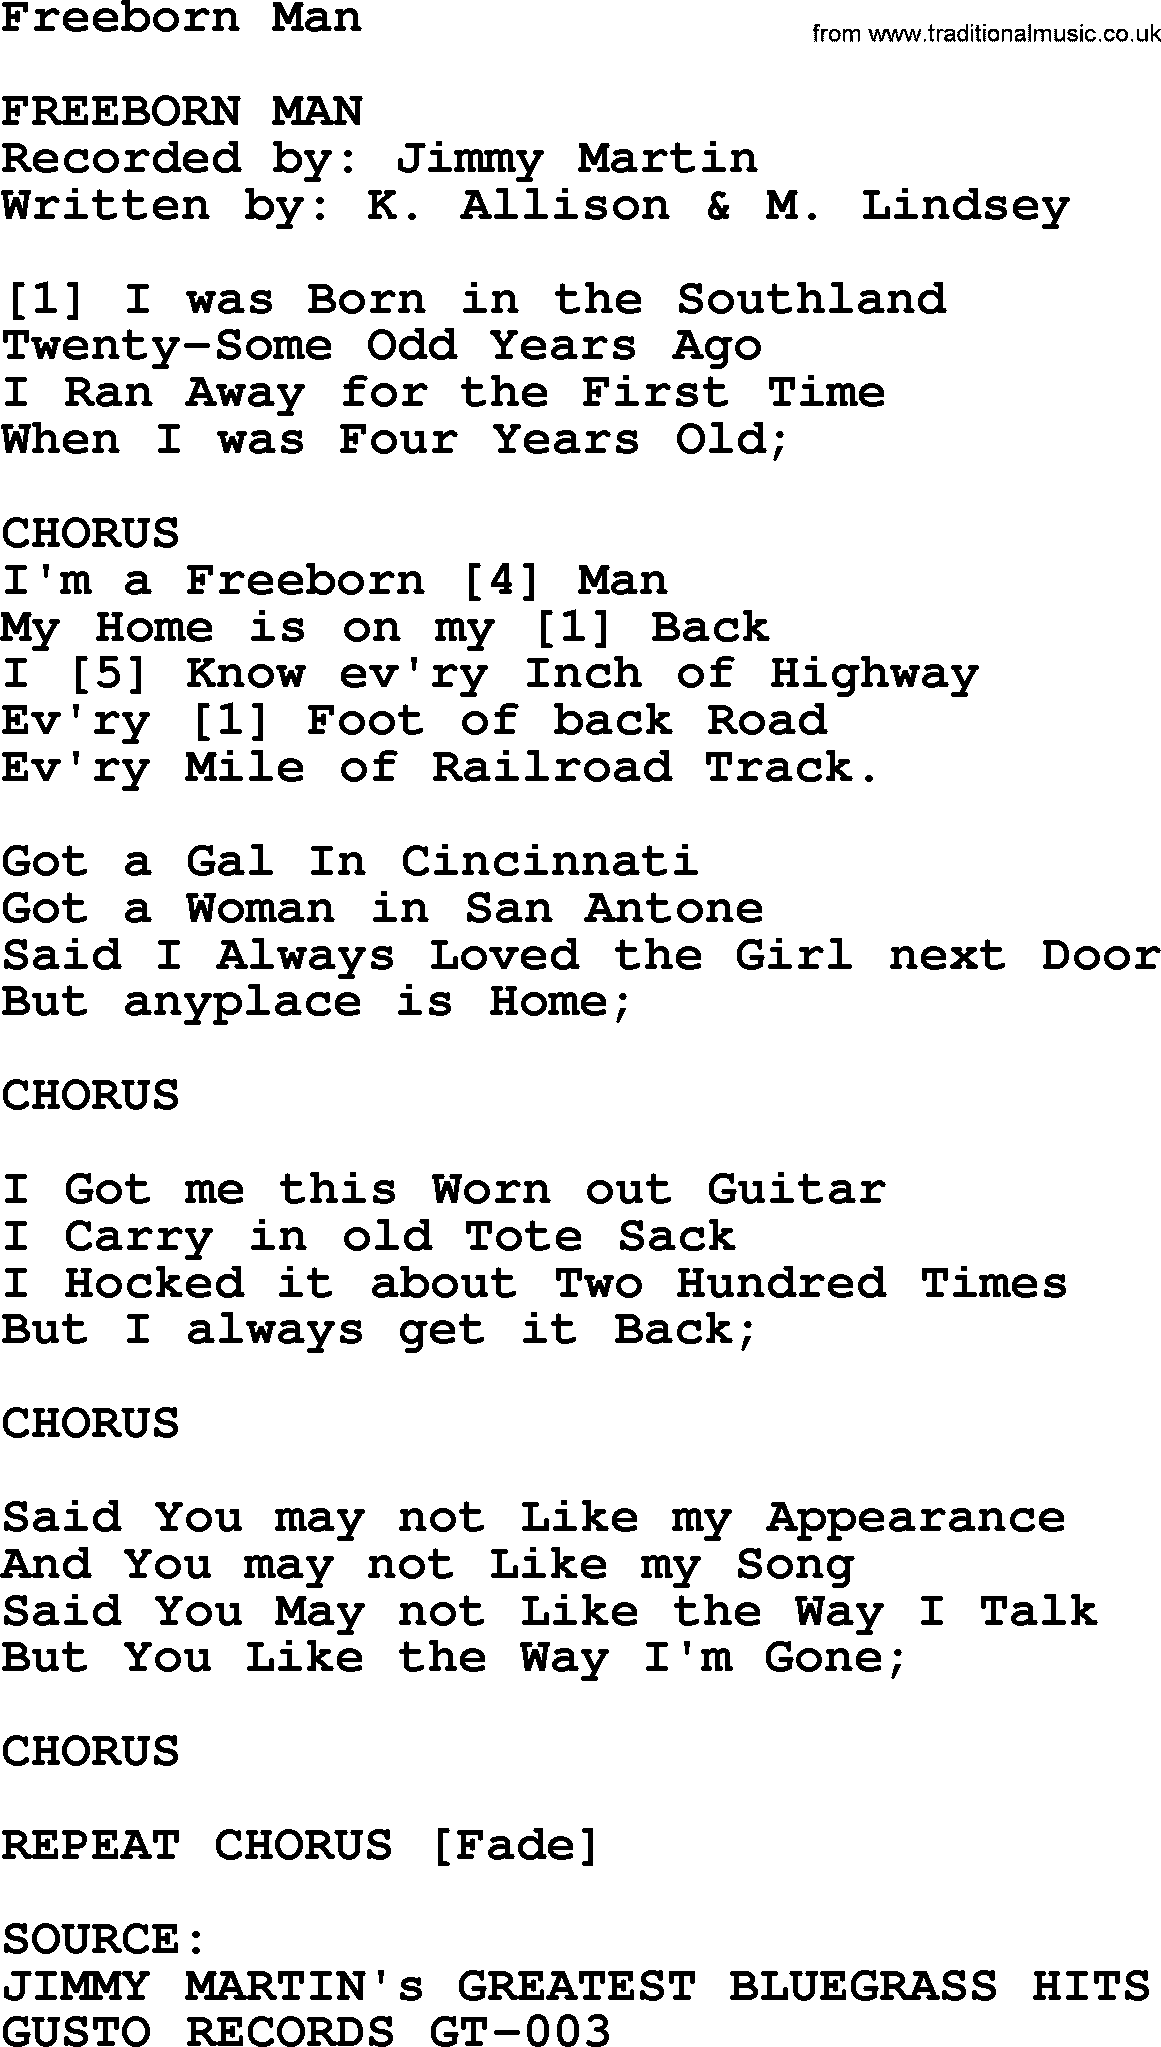 Bluegrass song: Freeborn Man, lyrics and chords